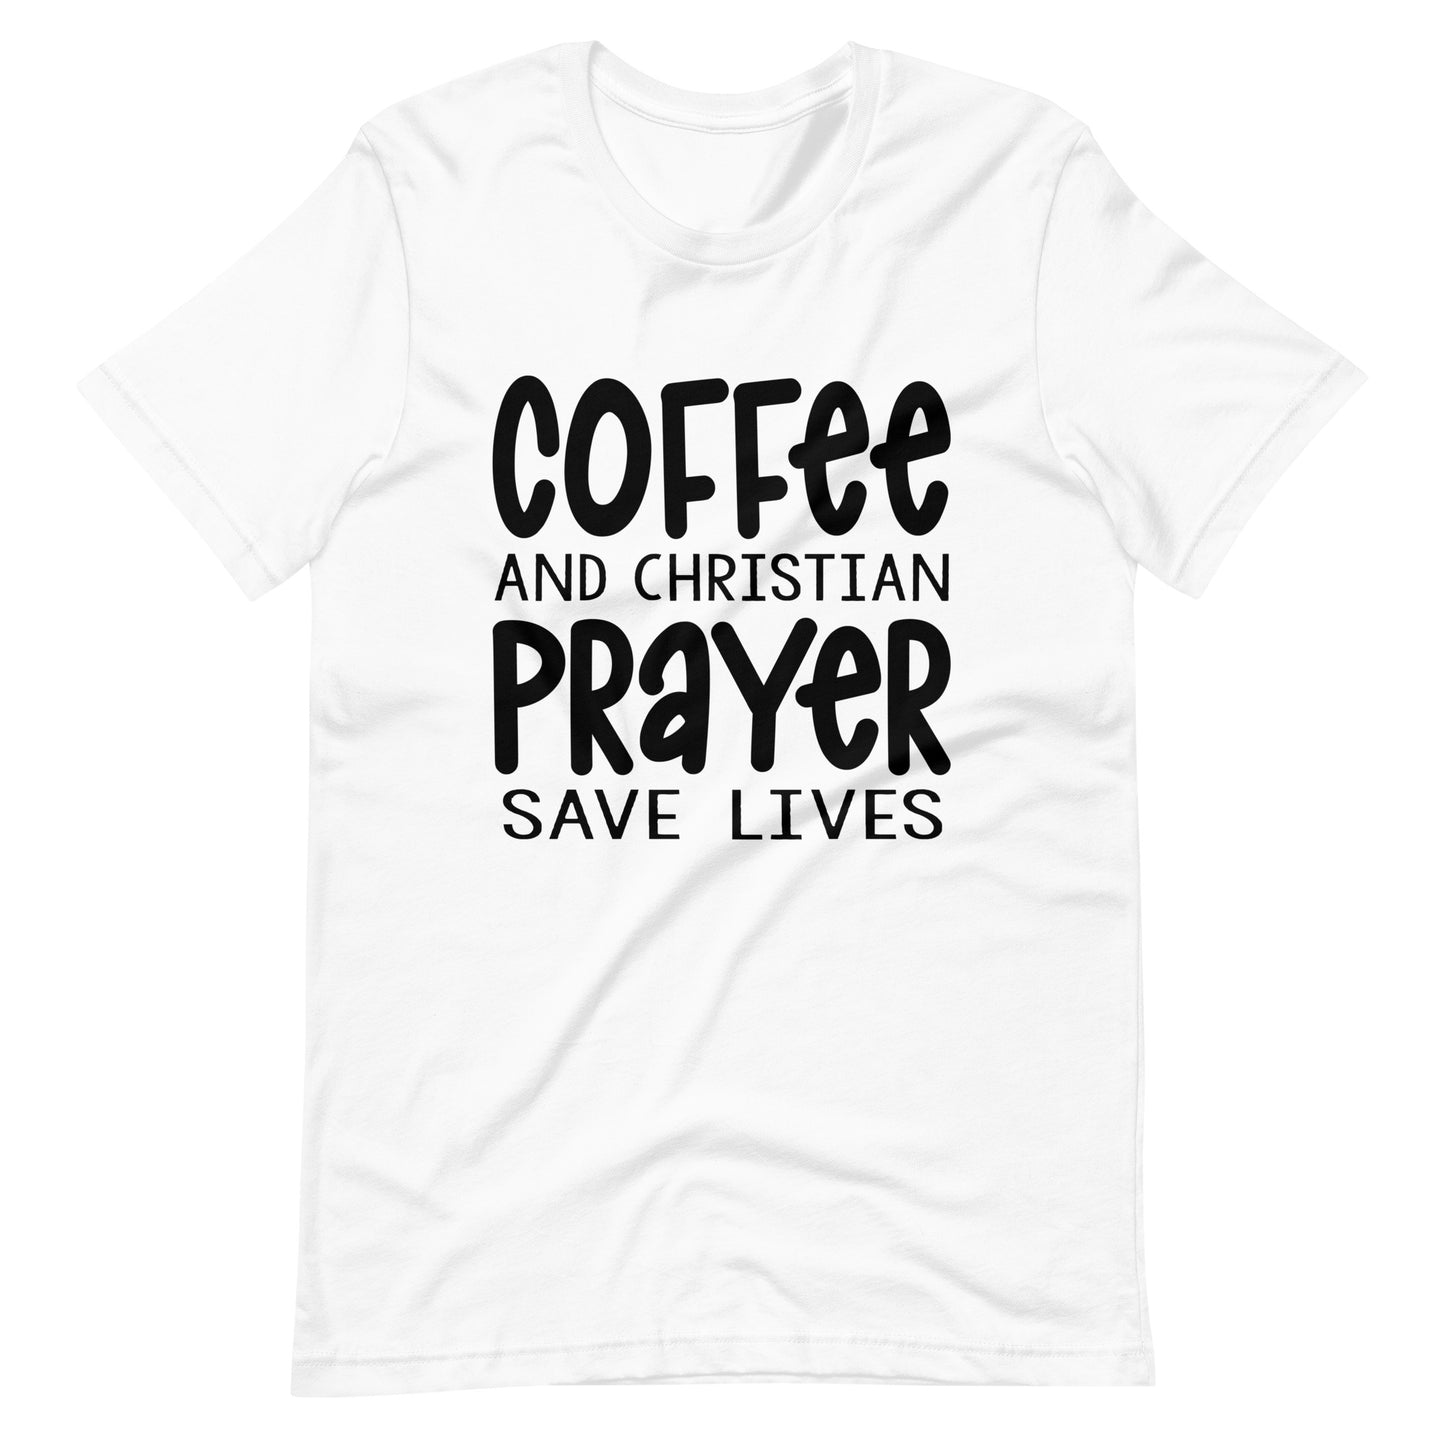 Coffee and Christian Prayer T Shirt